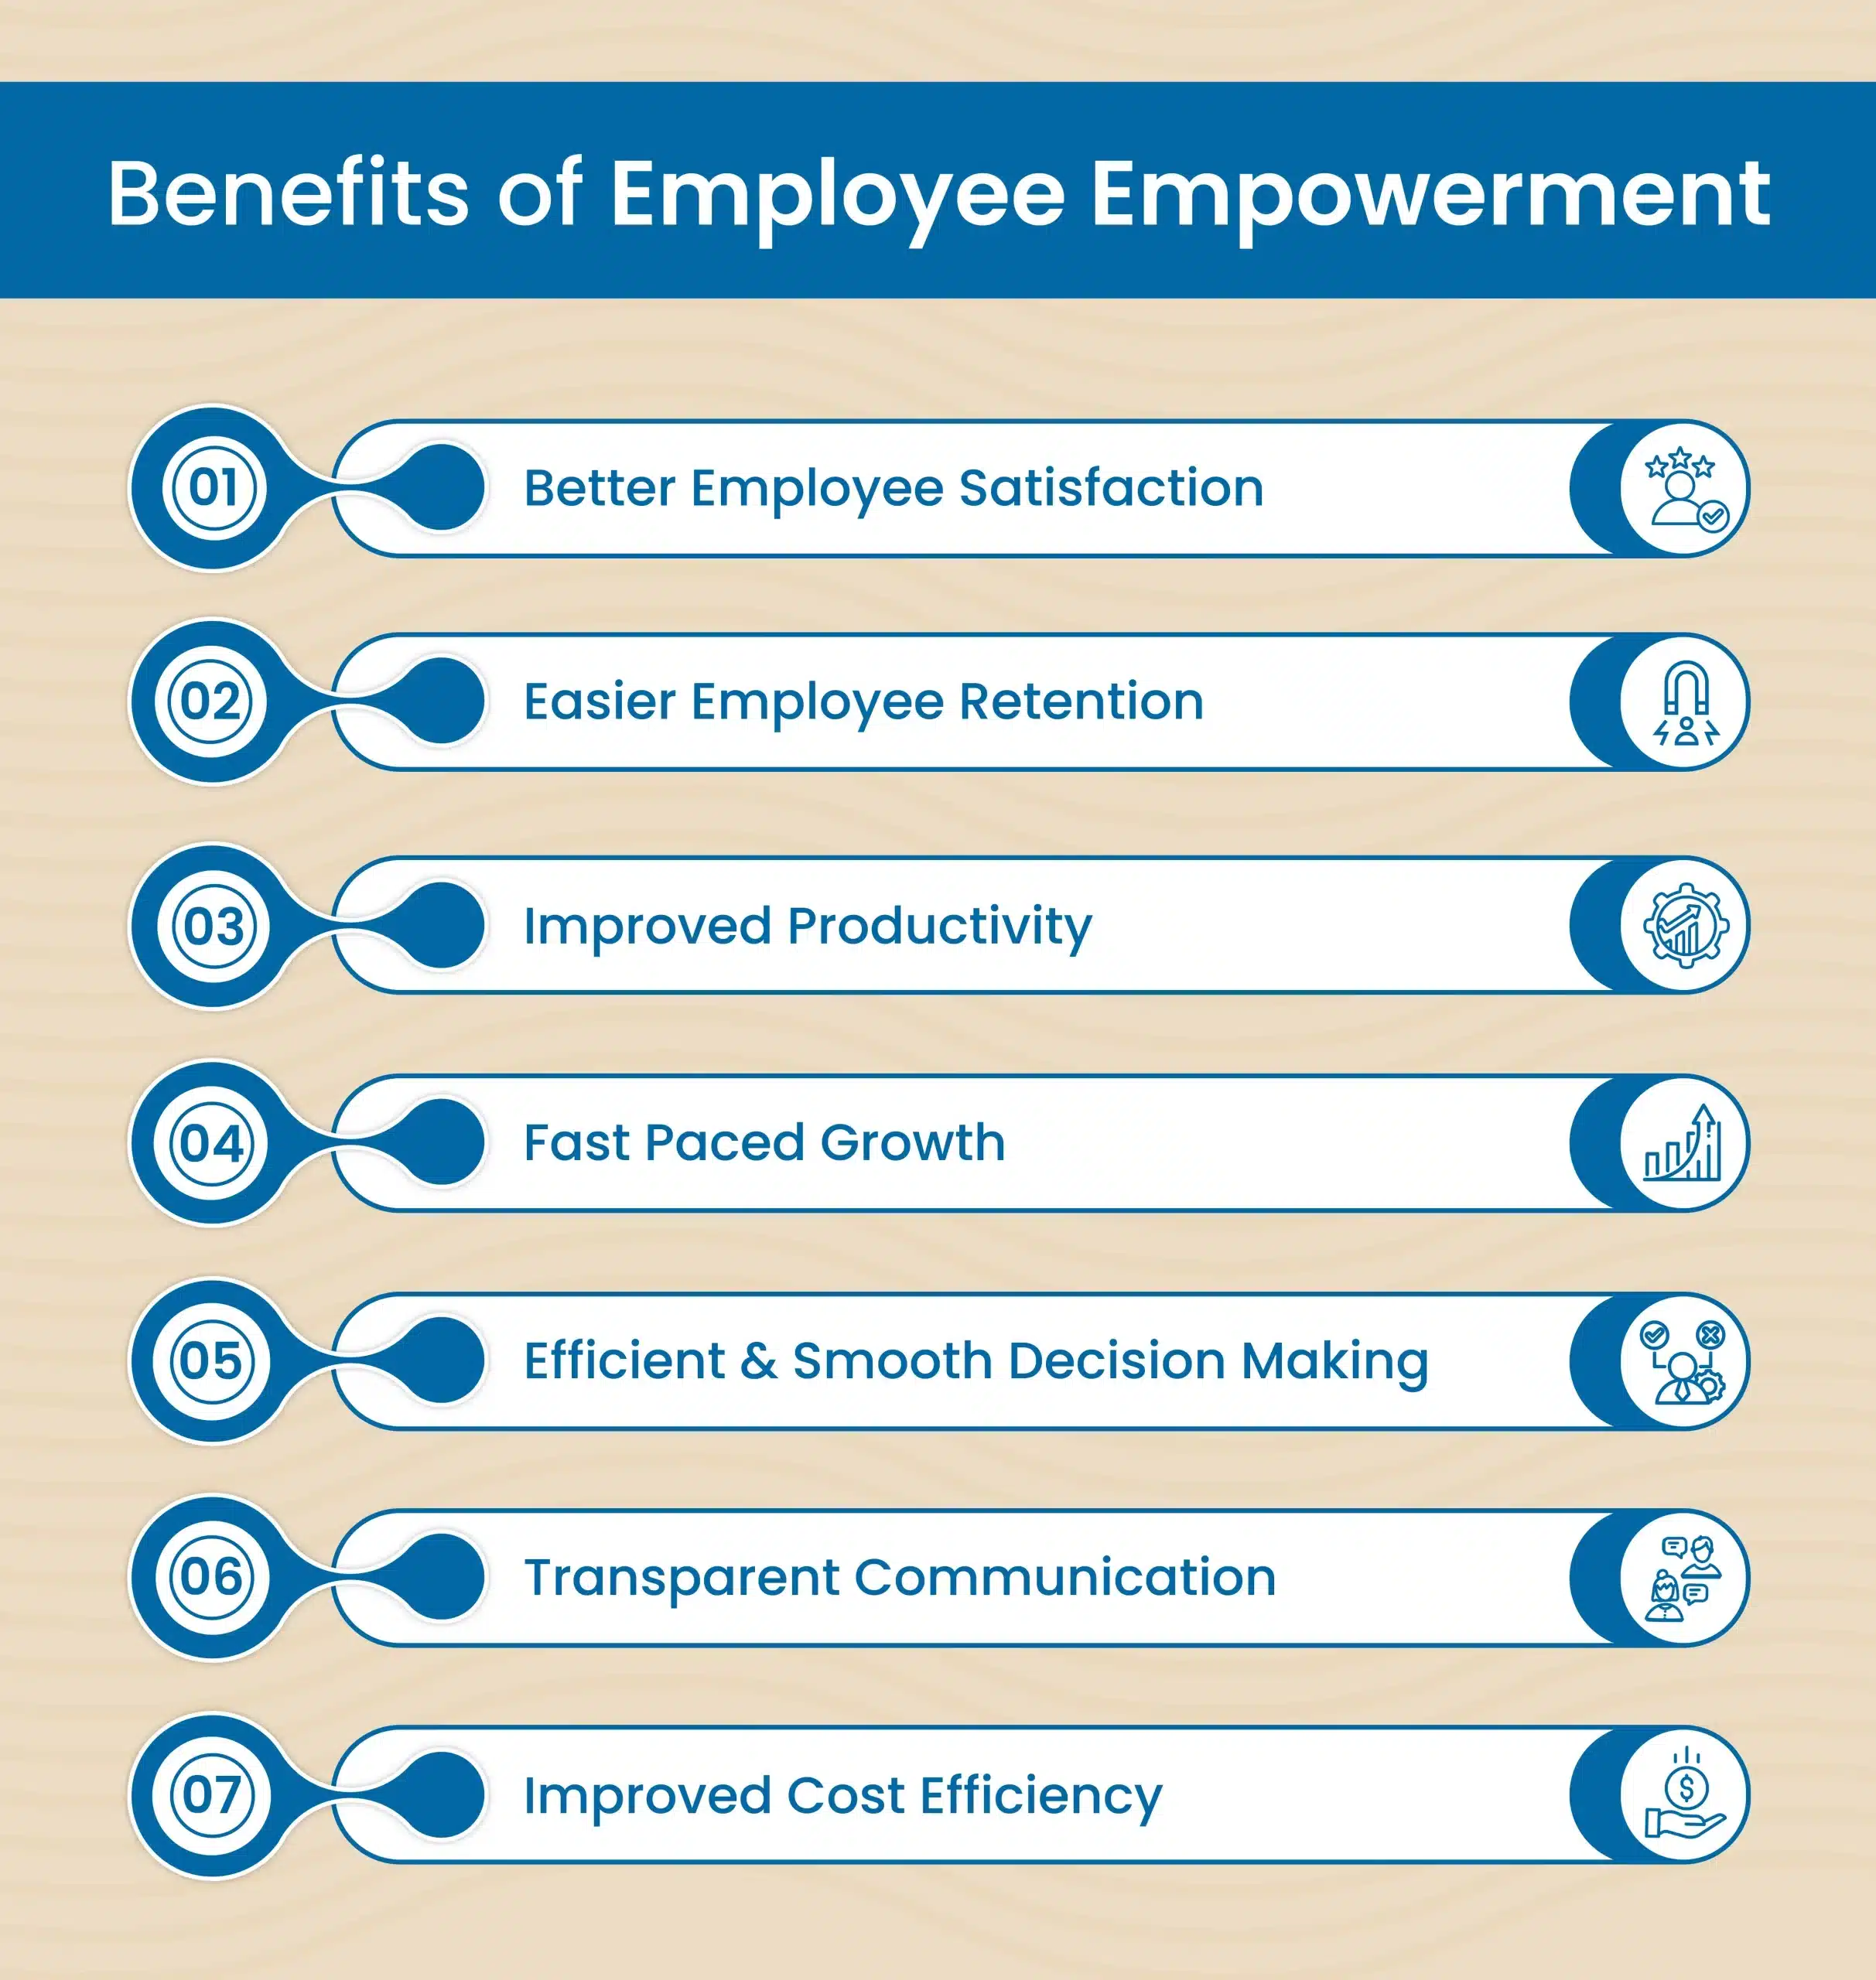 Benefits of employee empowerment